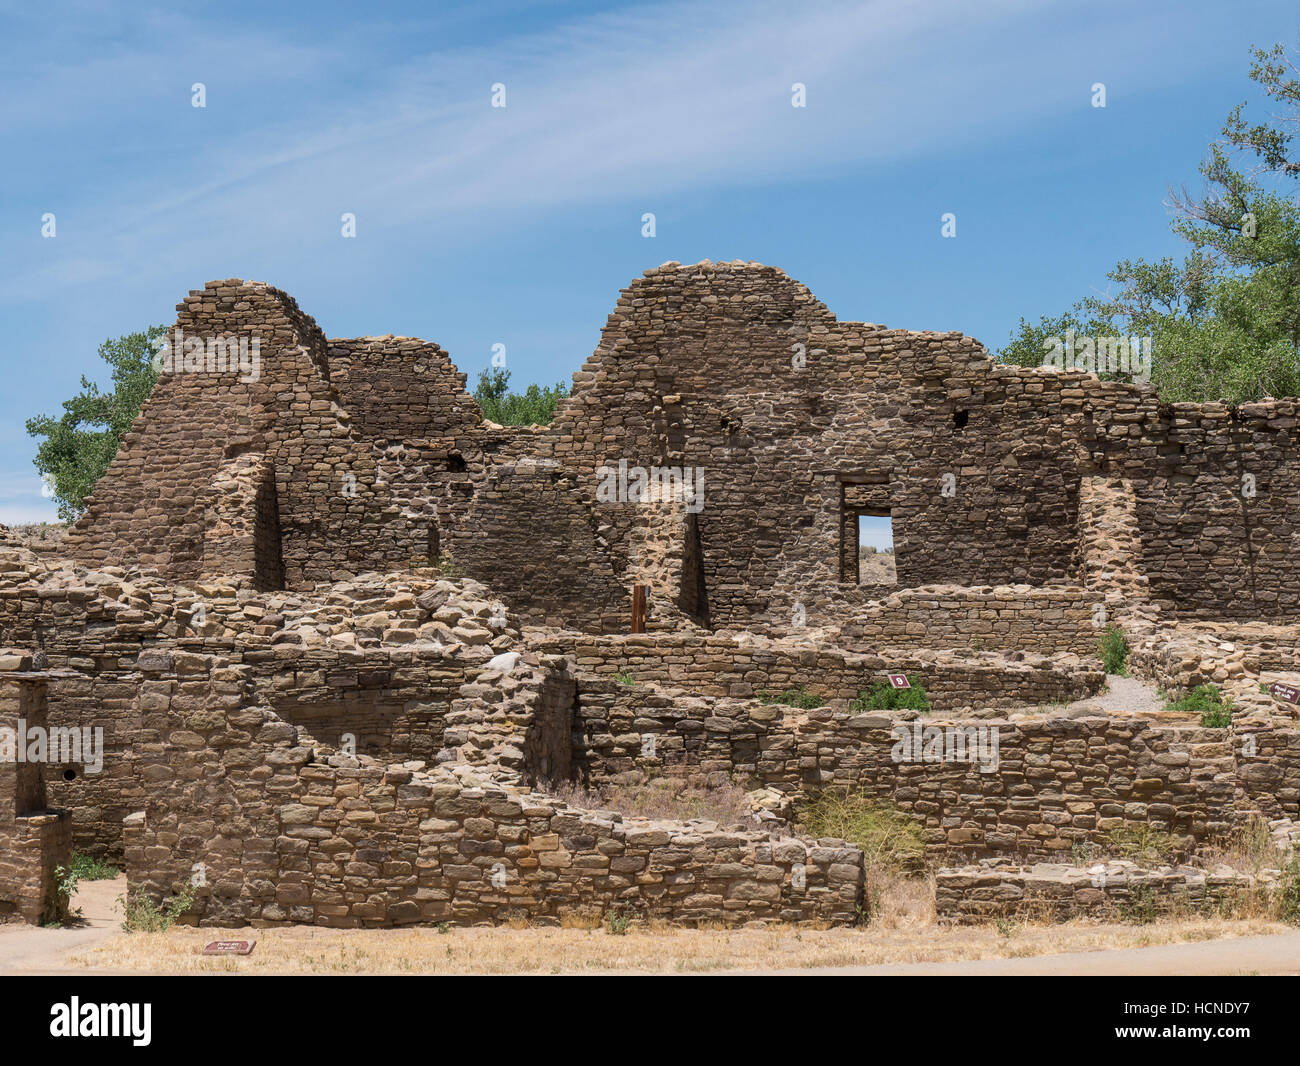 Aztec Ruins National Monument, Aztec, New Mexico. Stock Photo